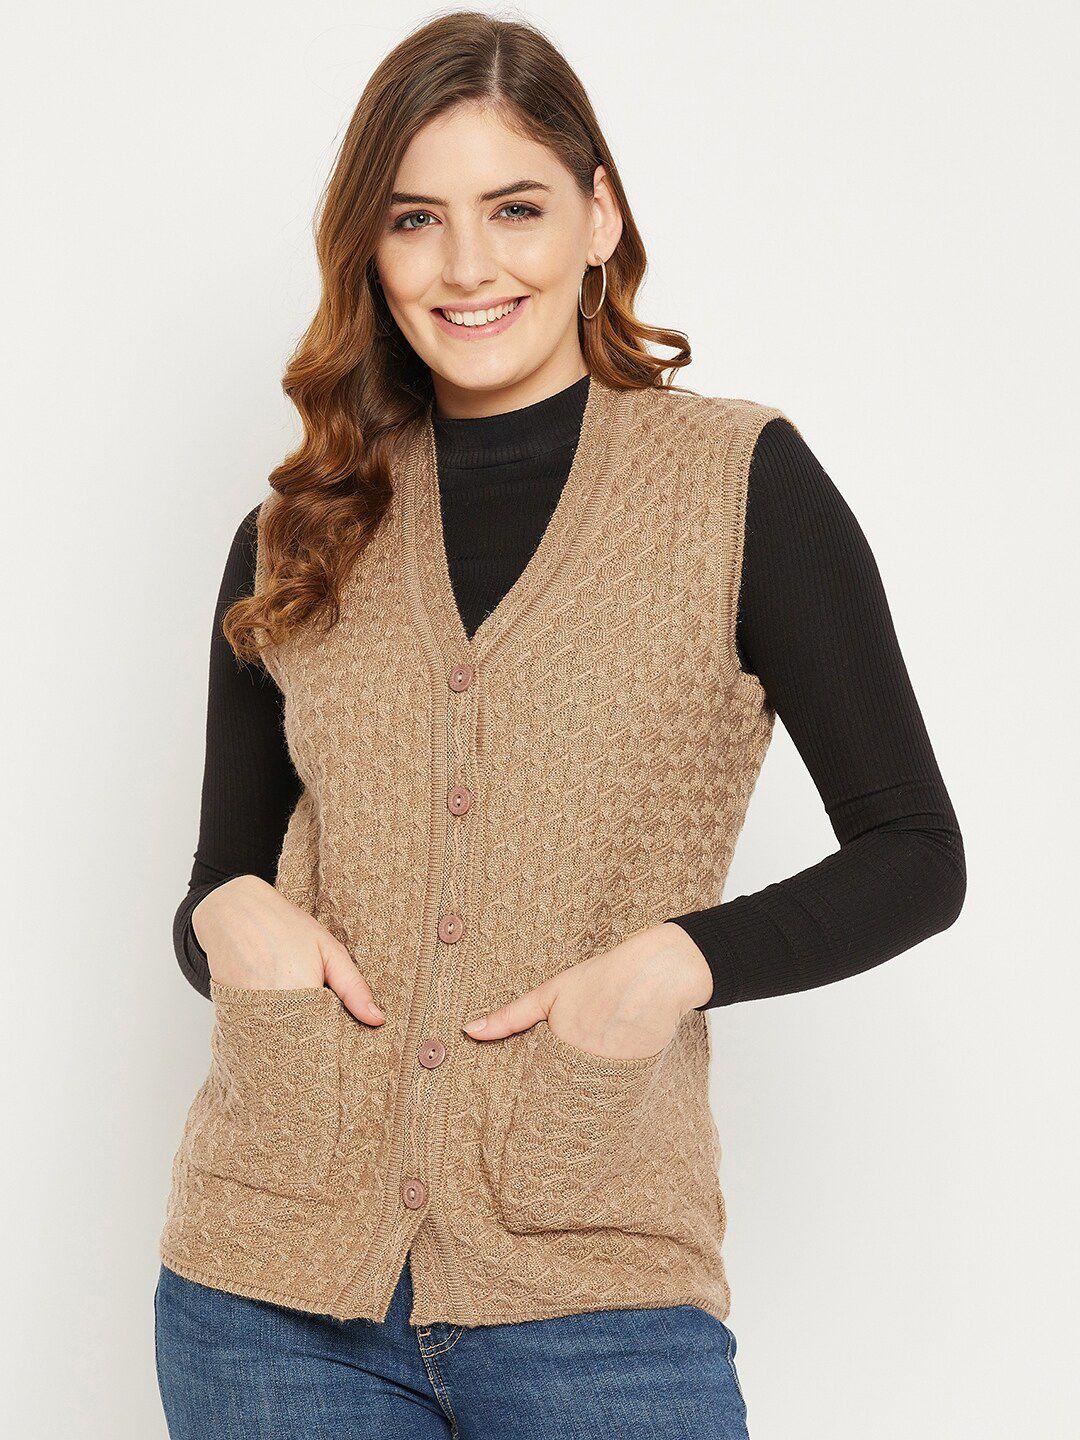 zigo-women-brown-self-design-cable-knit-wool-cardigan-sweater